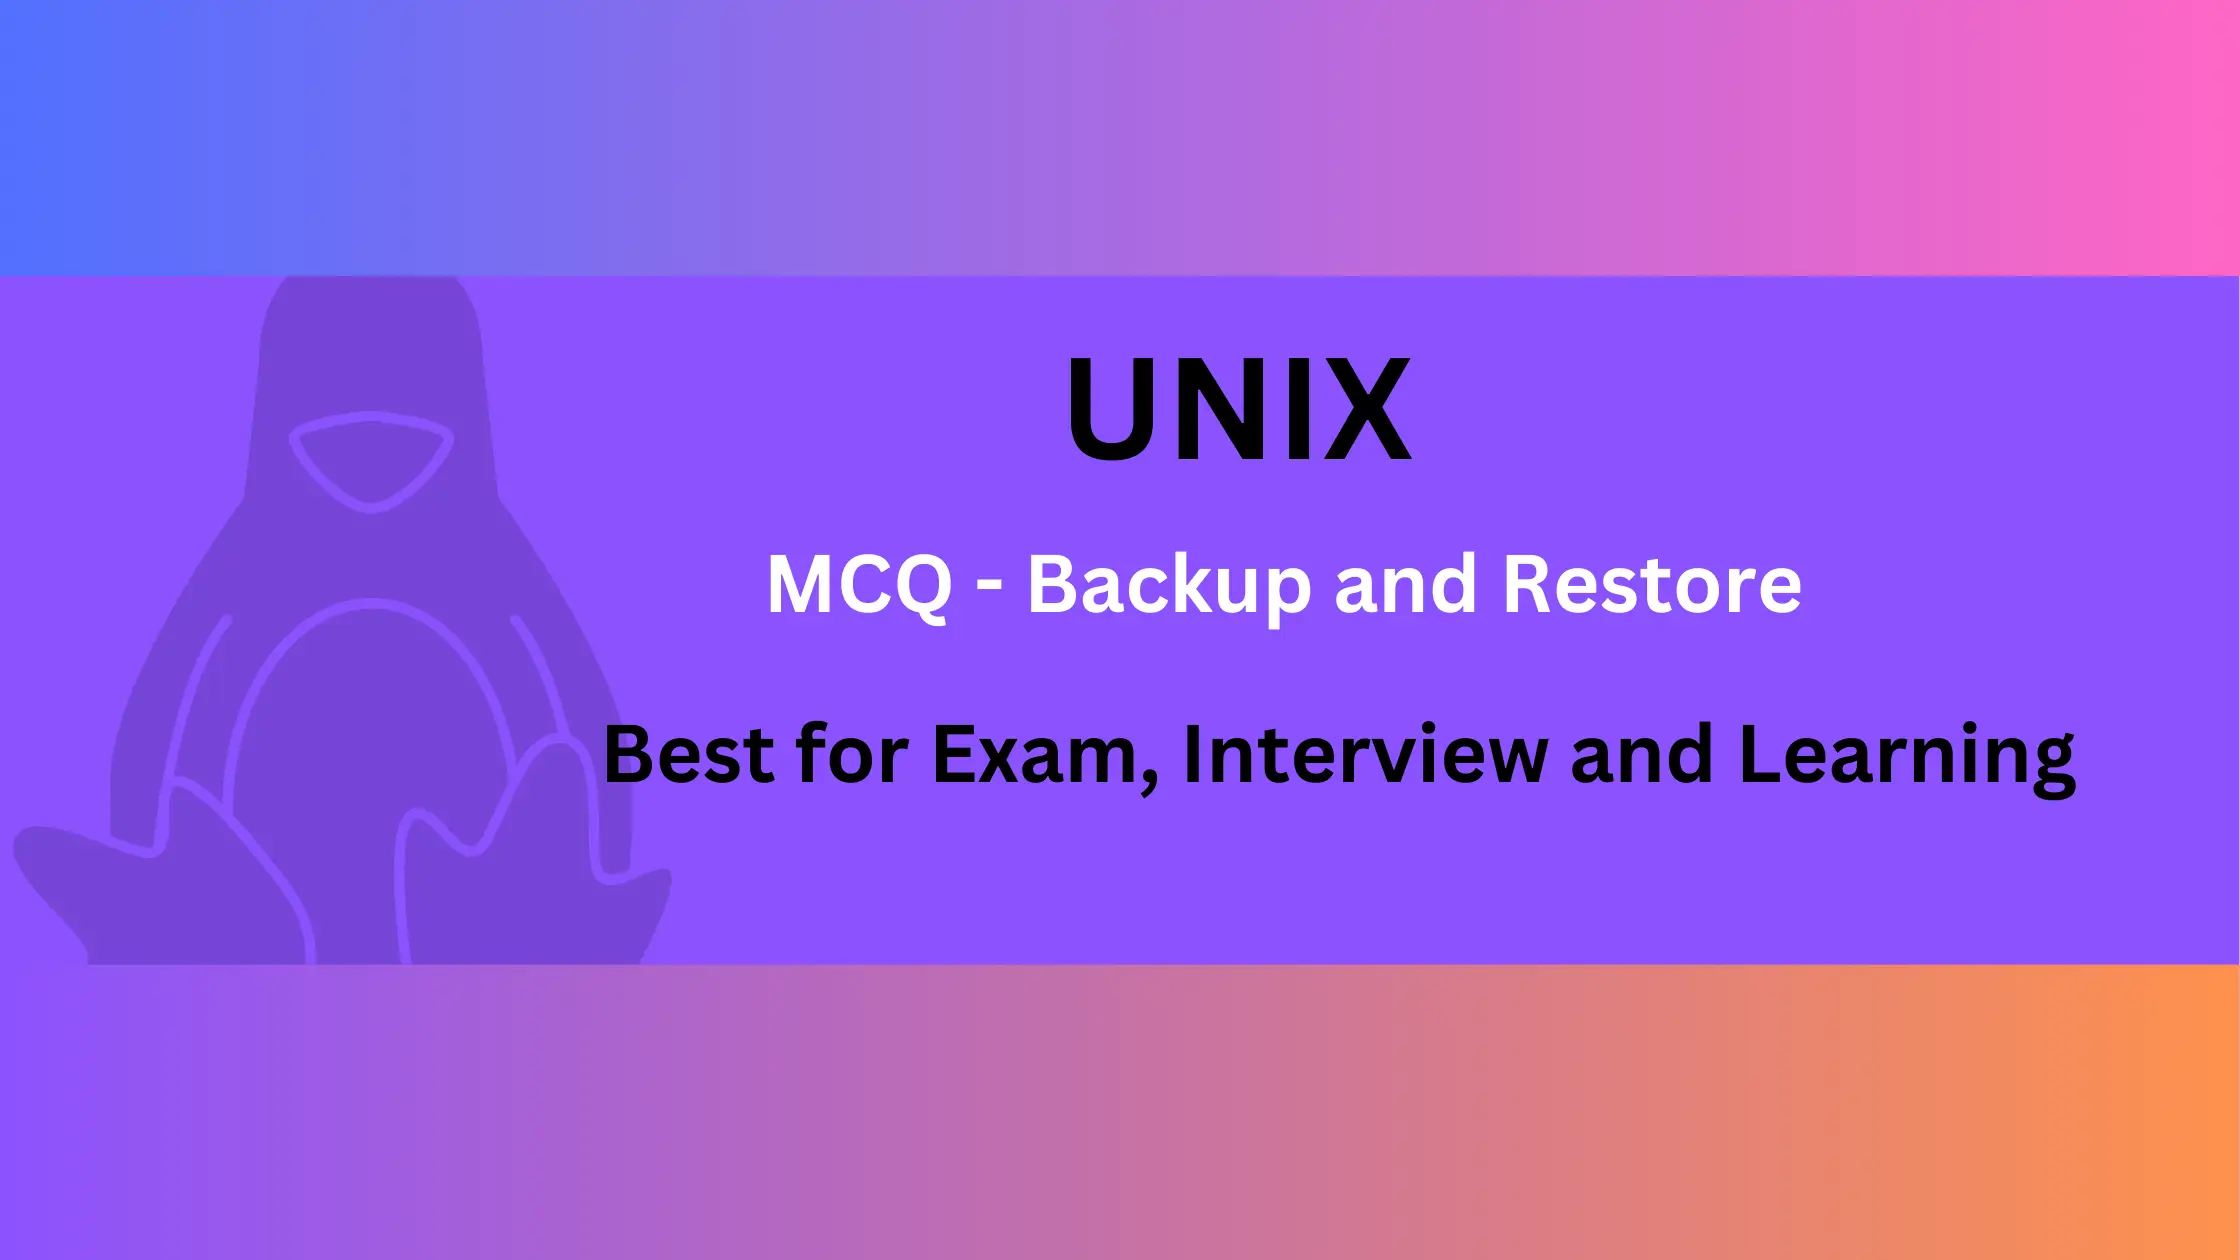 UNIX MCQ on Backup and Restore